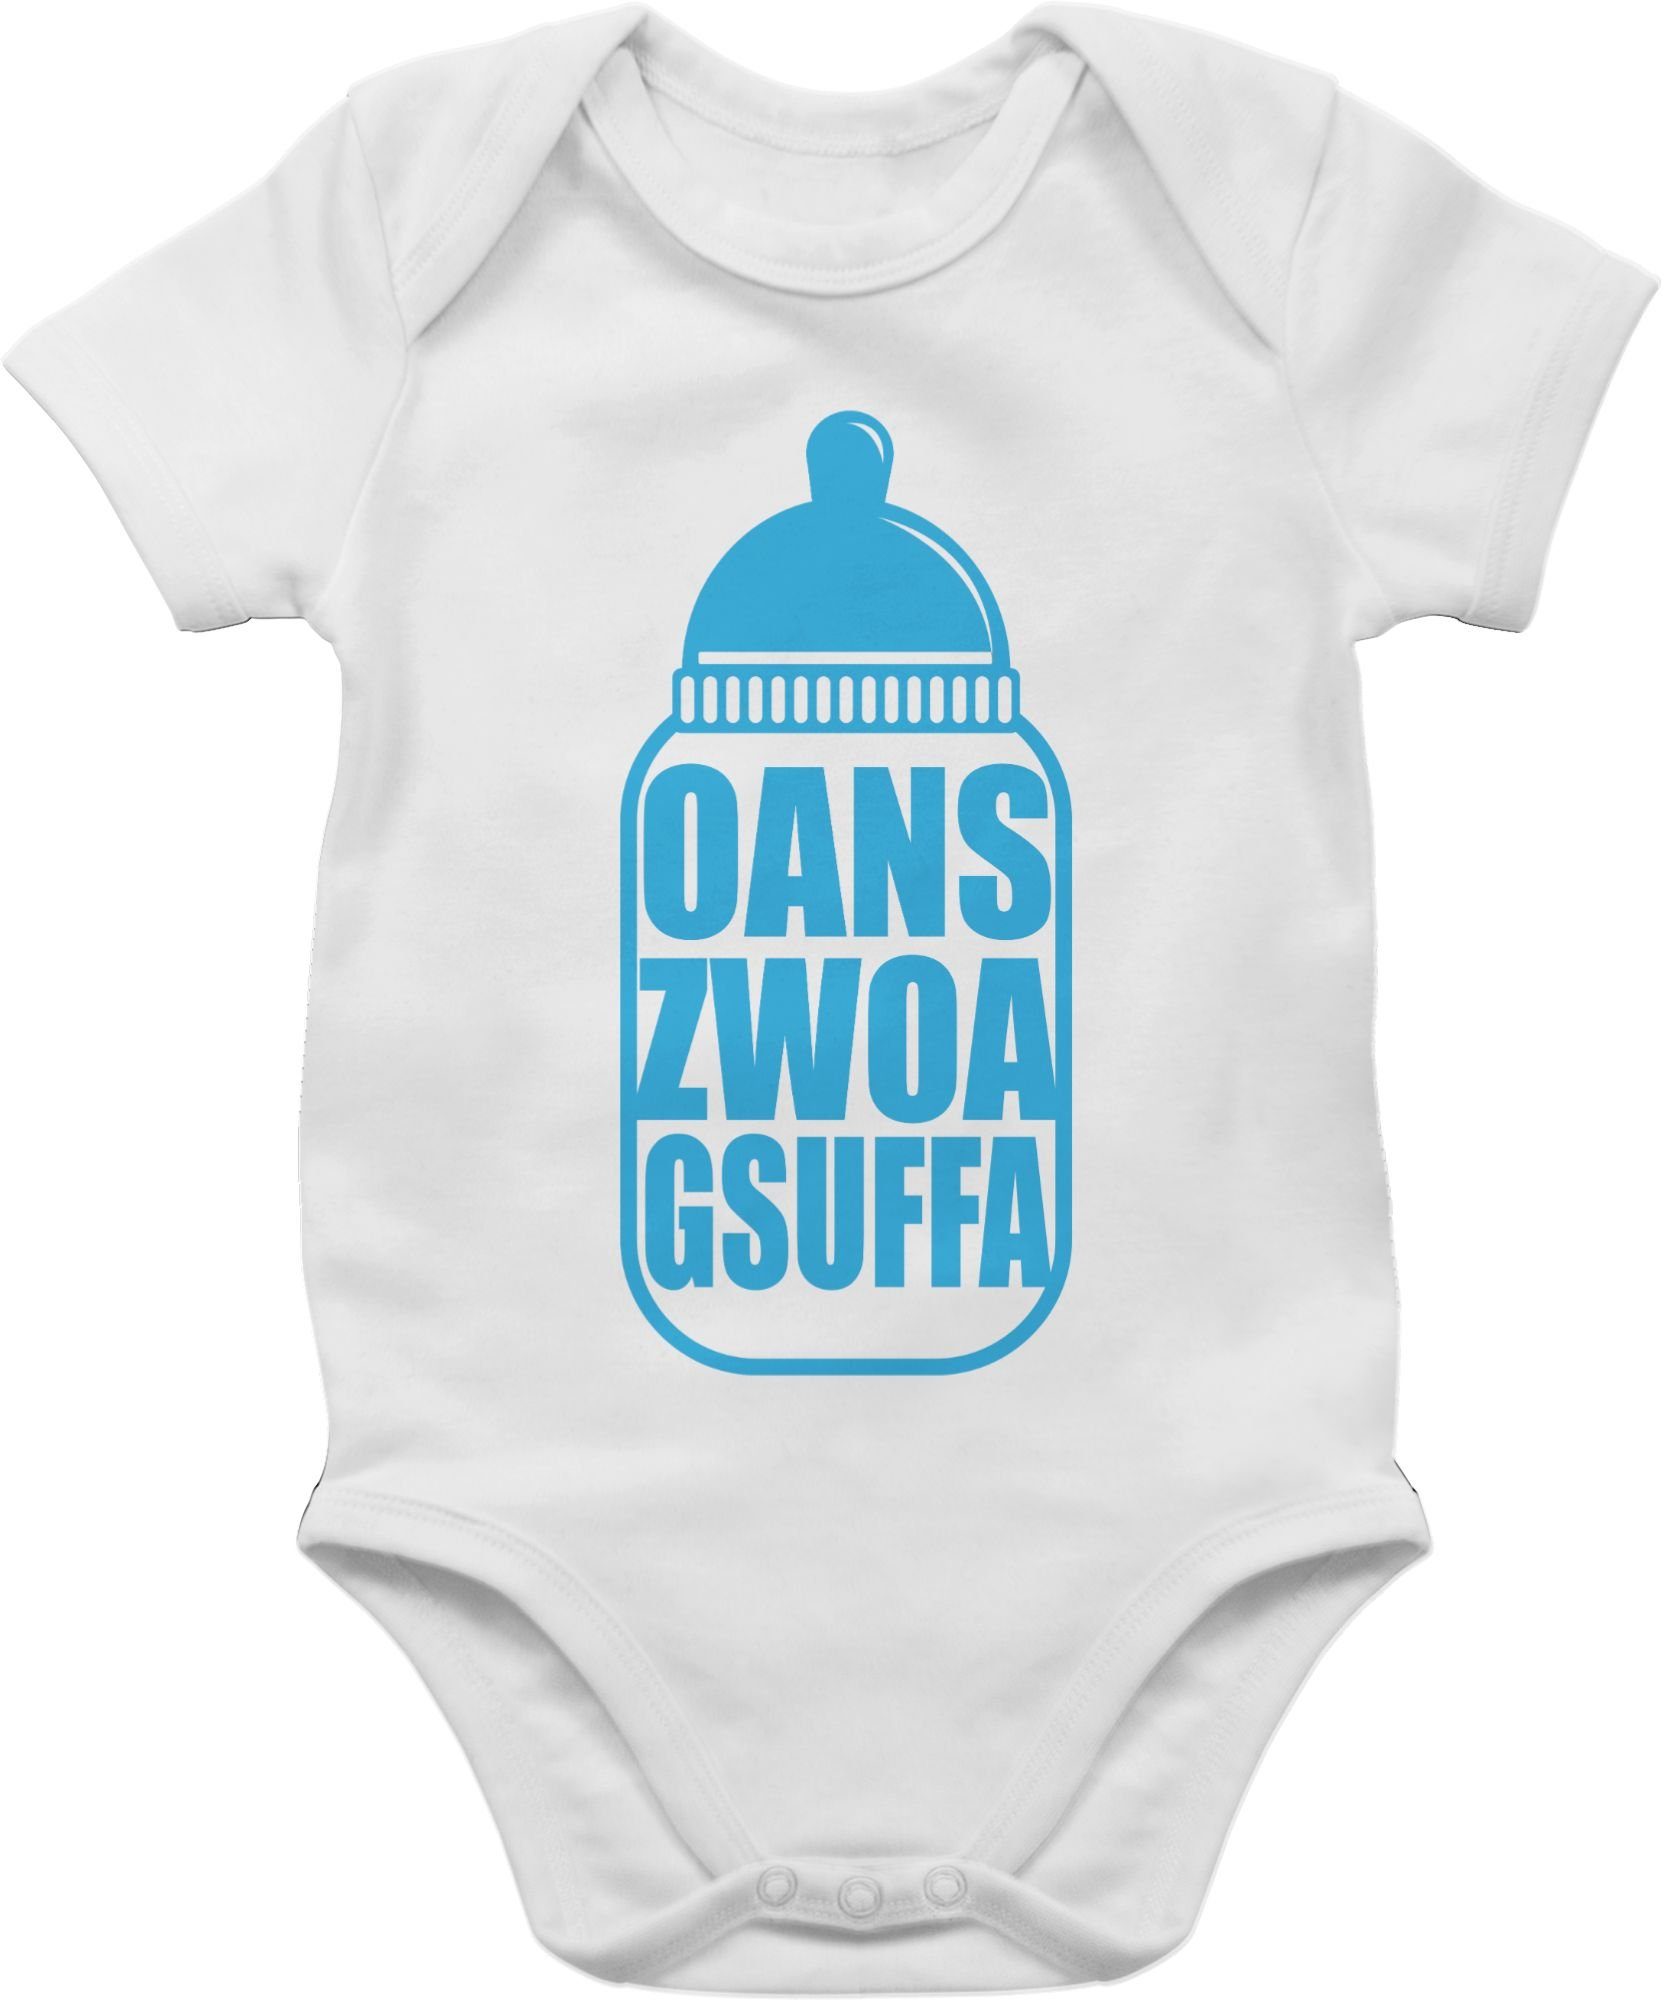 Shirtracer Shirtbody Babyflasche Oans Zwoa Gsuffa blau Mode für Oktoberfest Baby Outfit 1 Weiß